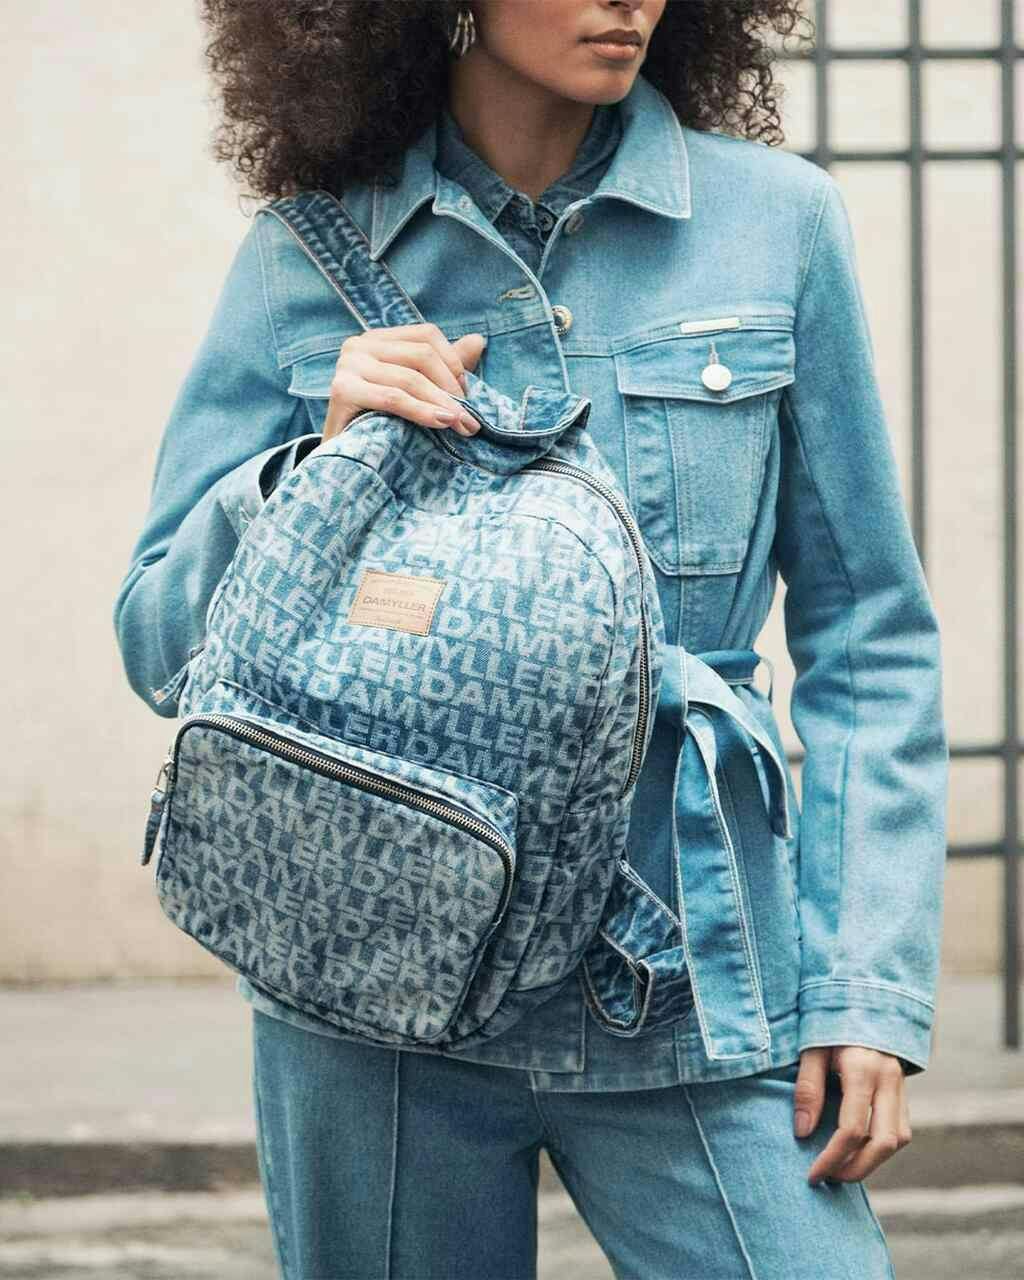 clothing pants jeans accessories bag handbag purse